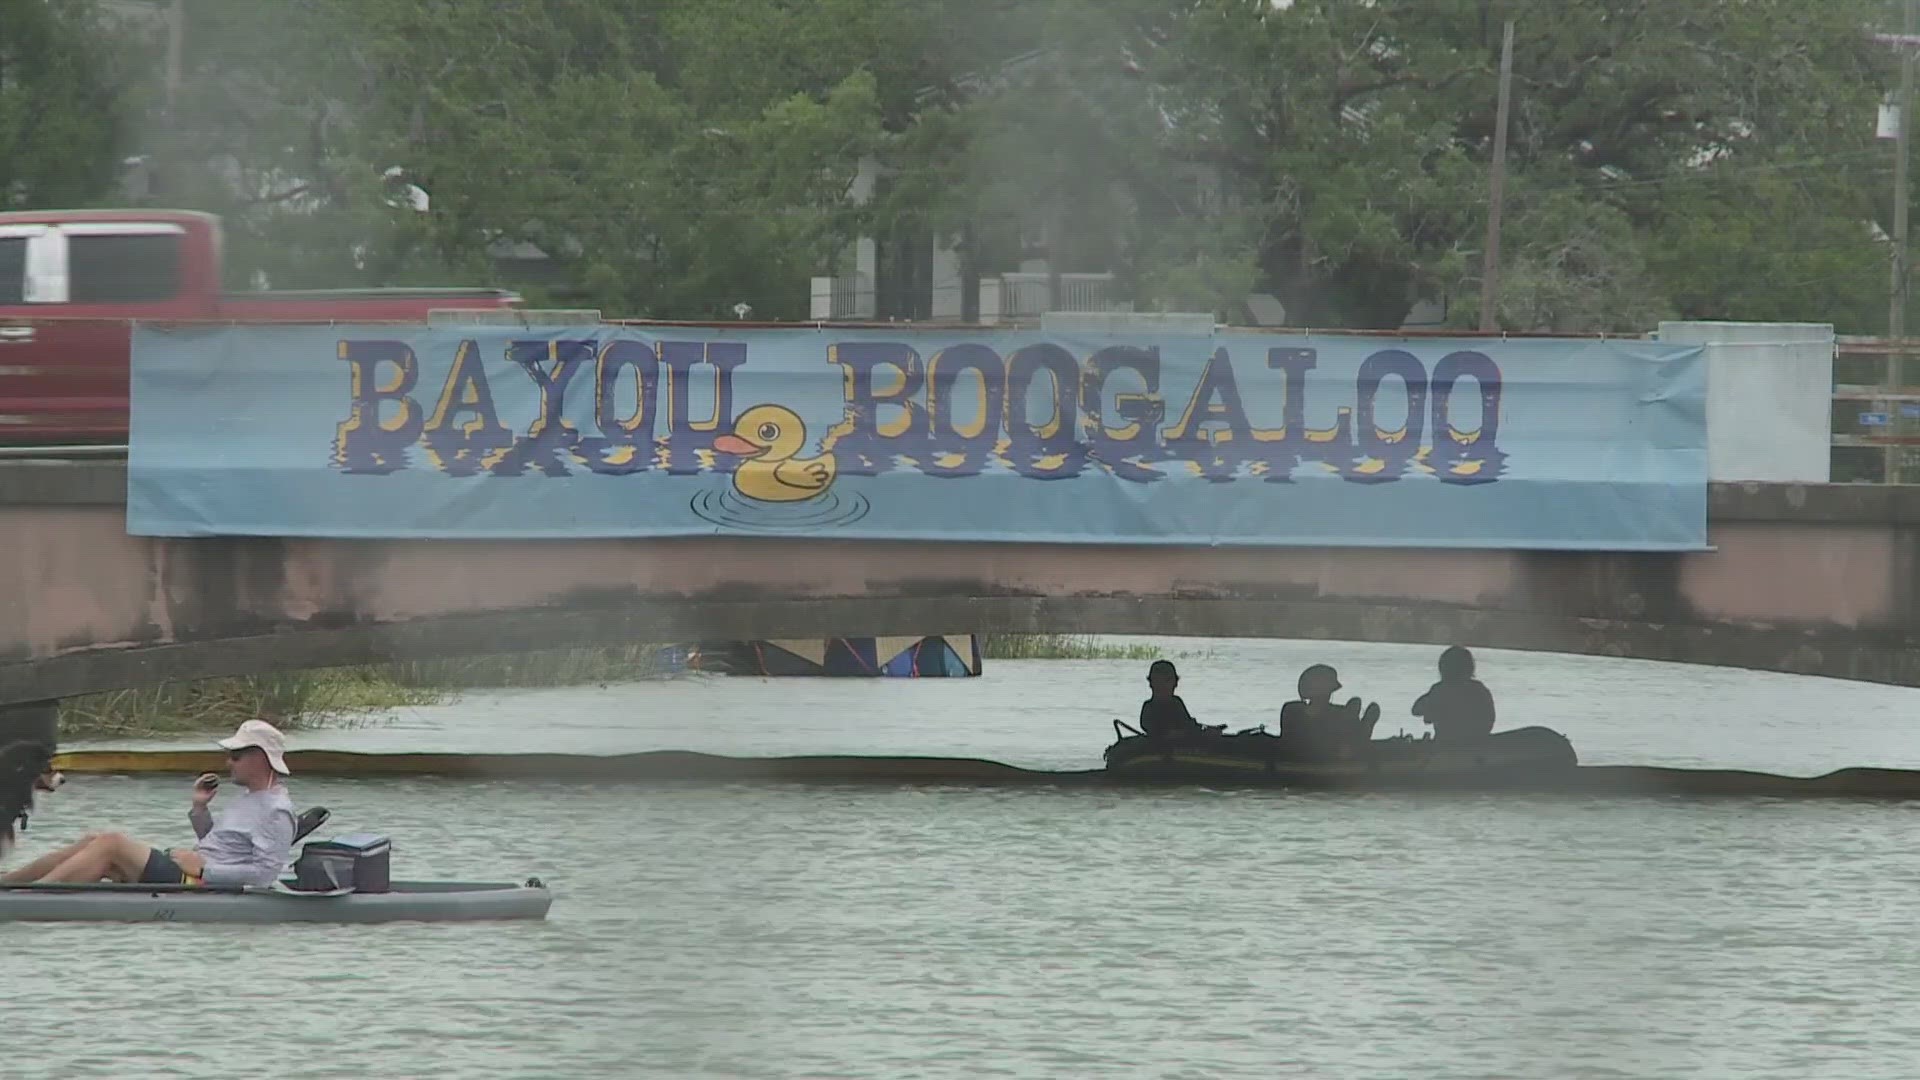 Bayoo Boogaloo returns to the the banks of Bayou St. John.